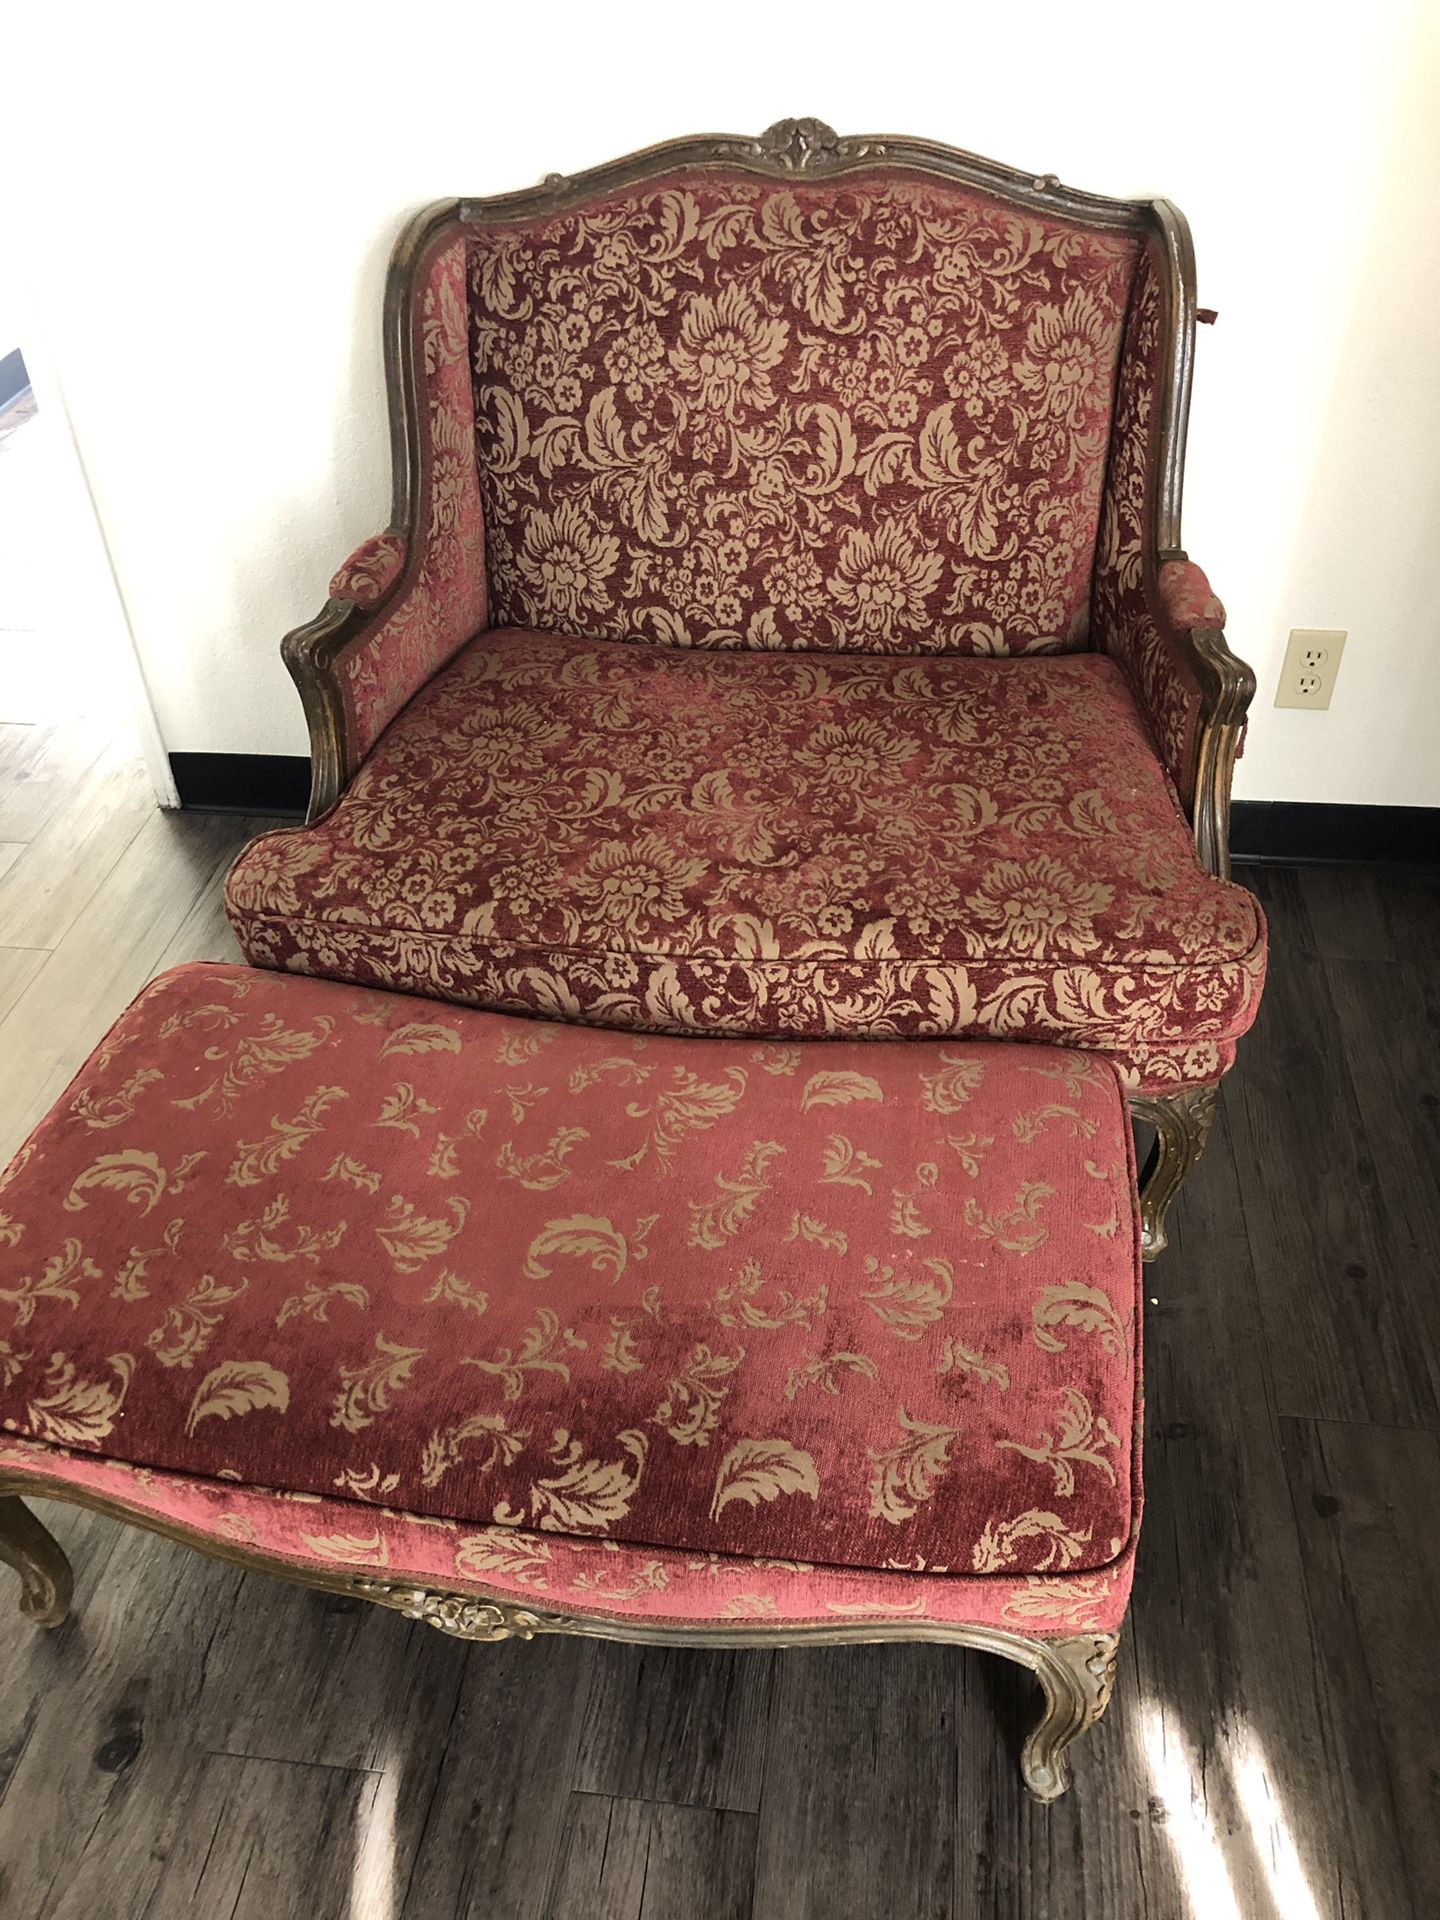 Antique chair/ottoman loveseat